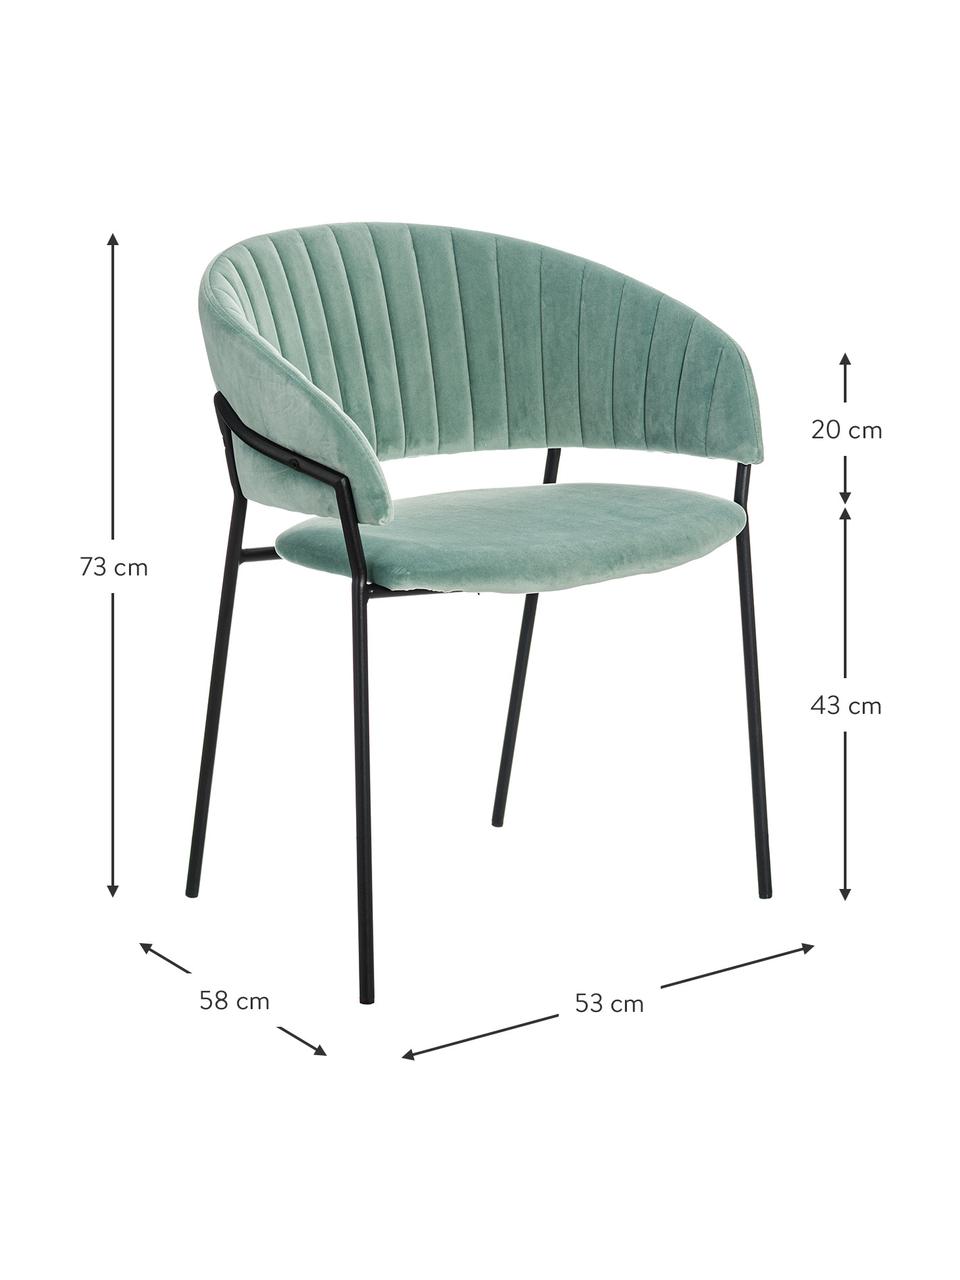 Fluwelen stoel Room in mintgroen, Bekleding: 100% polyester fluweel, Frame: gecoat metaal, Mintgroen, 53 x 58 cm